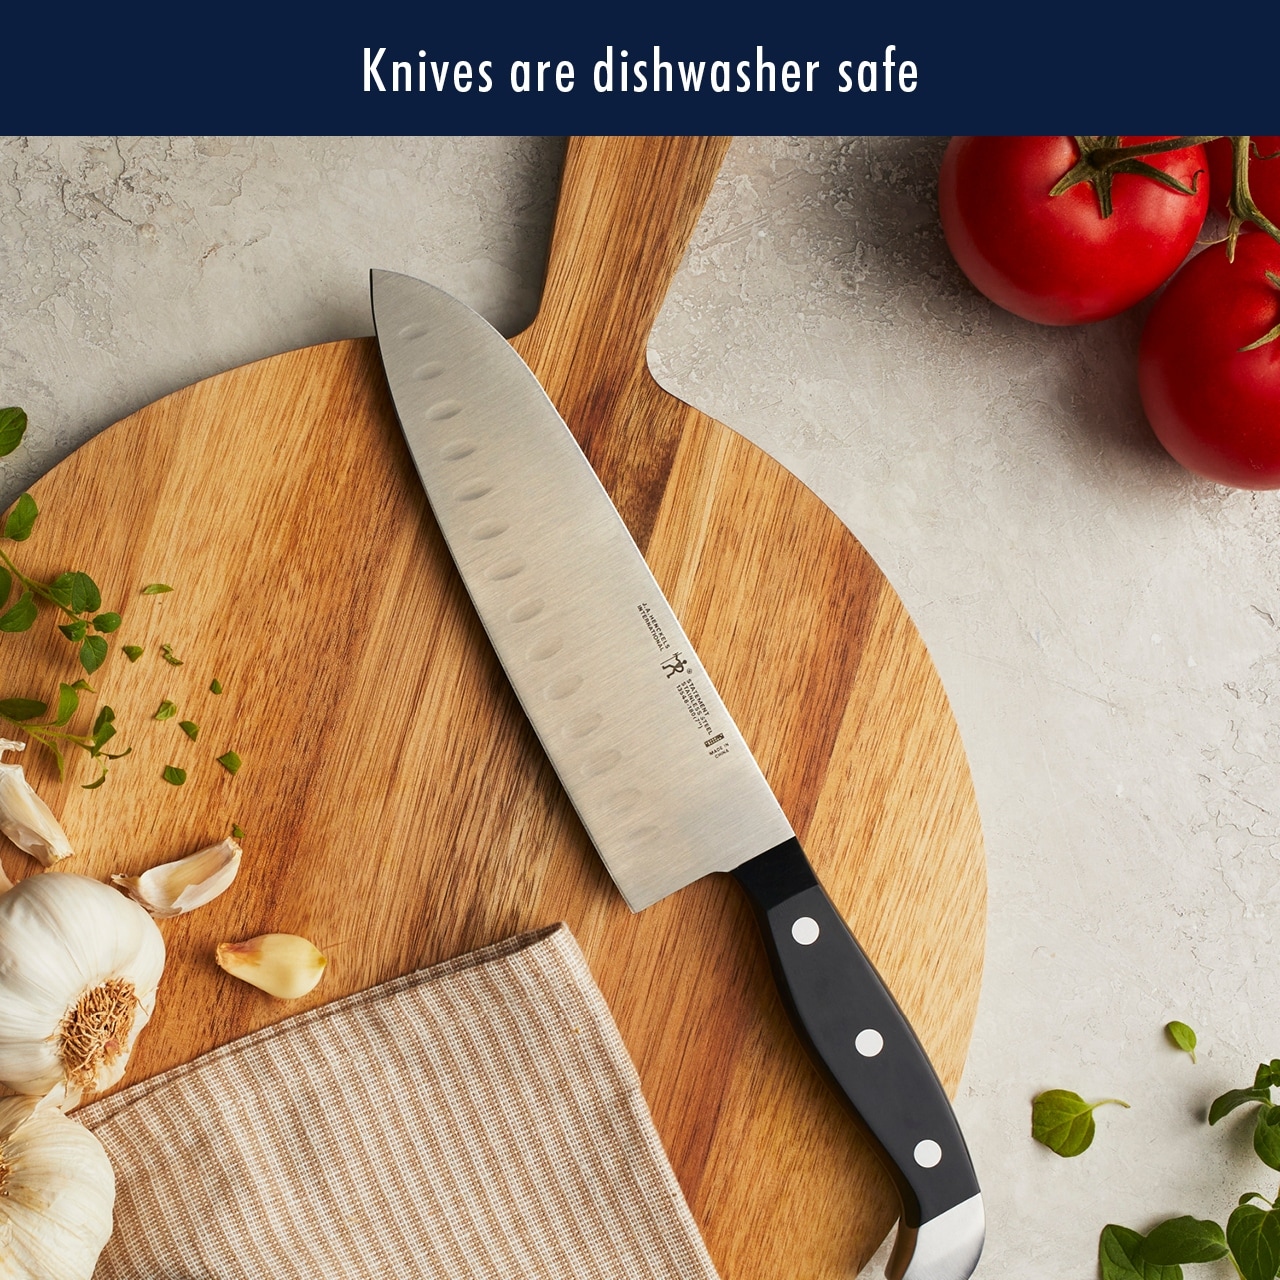 HENCKELS Statement Self-Sharpening Knife Set with Block, Chef